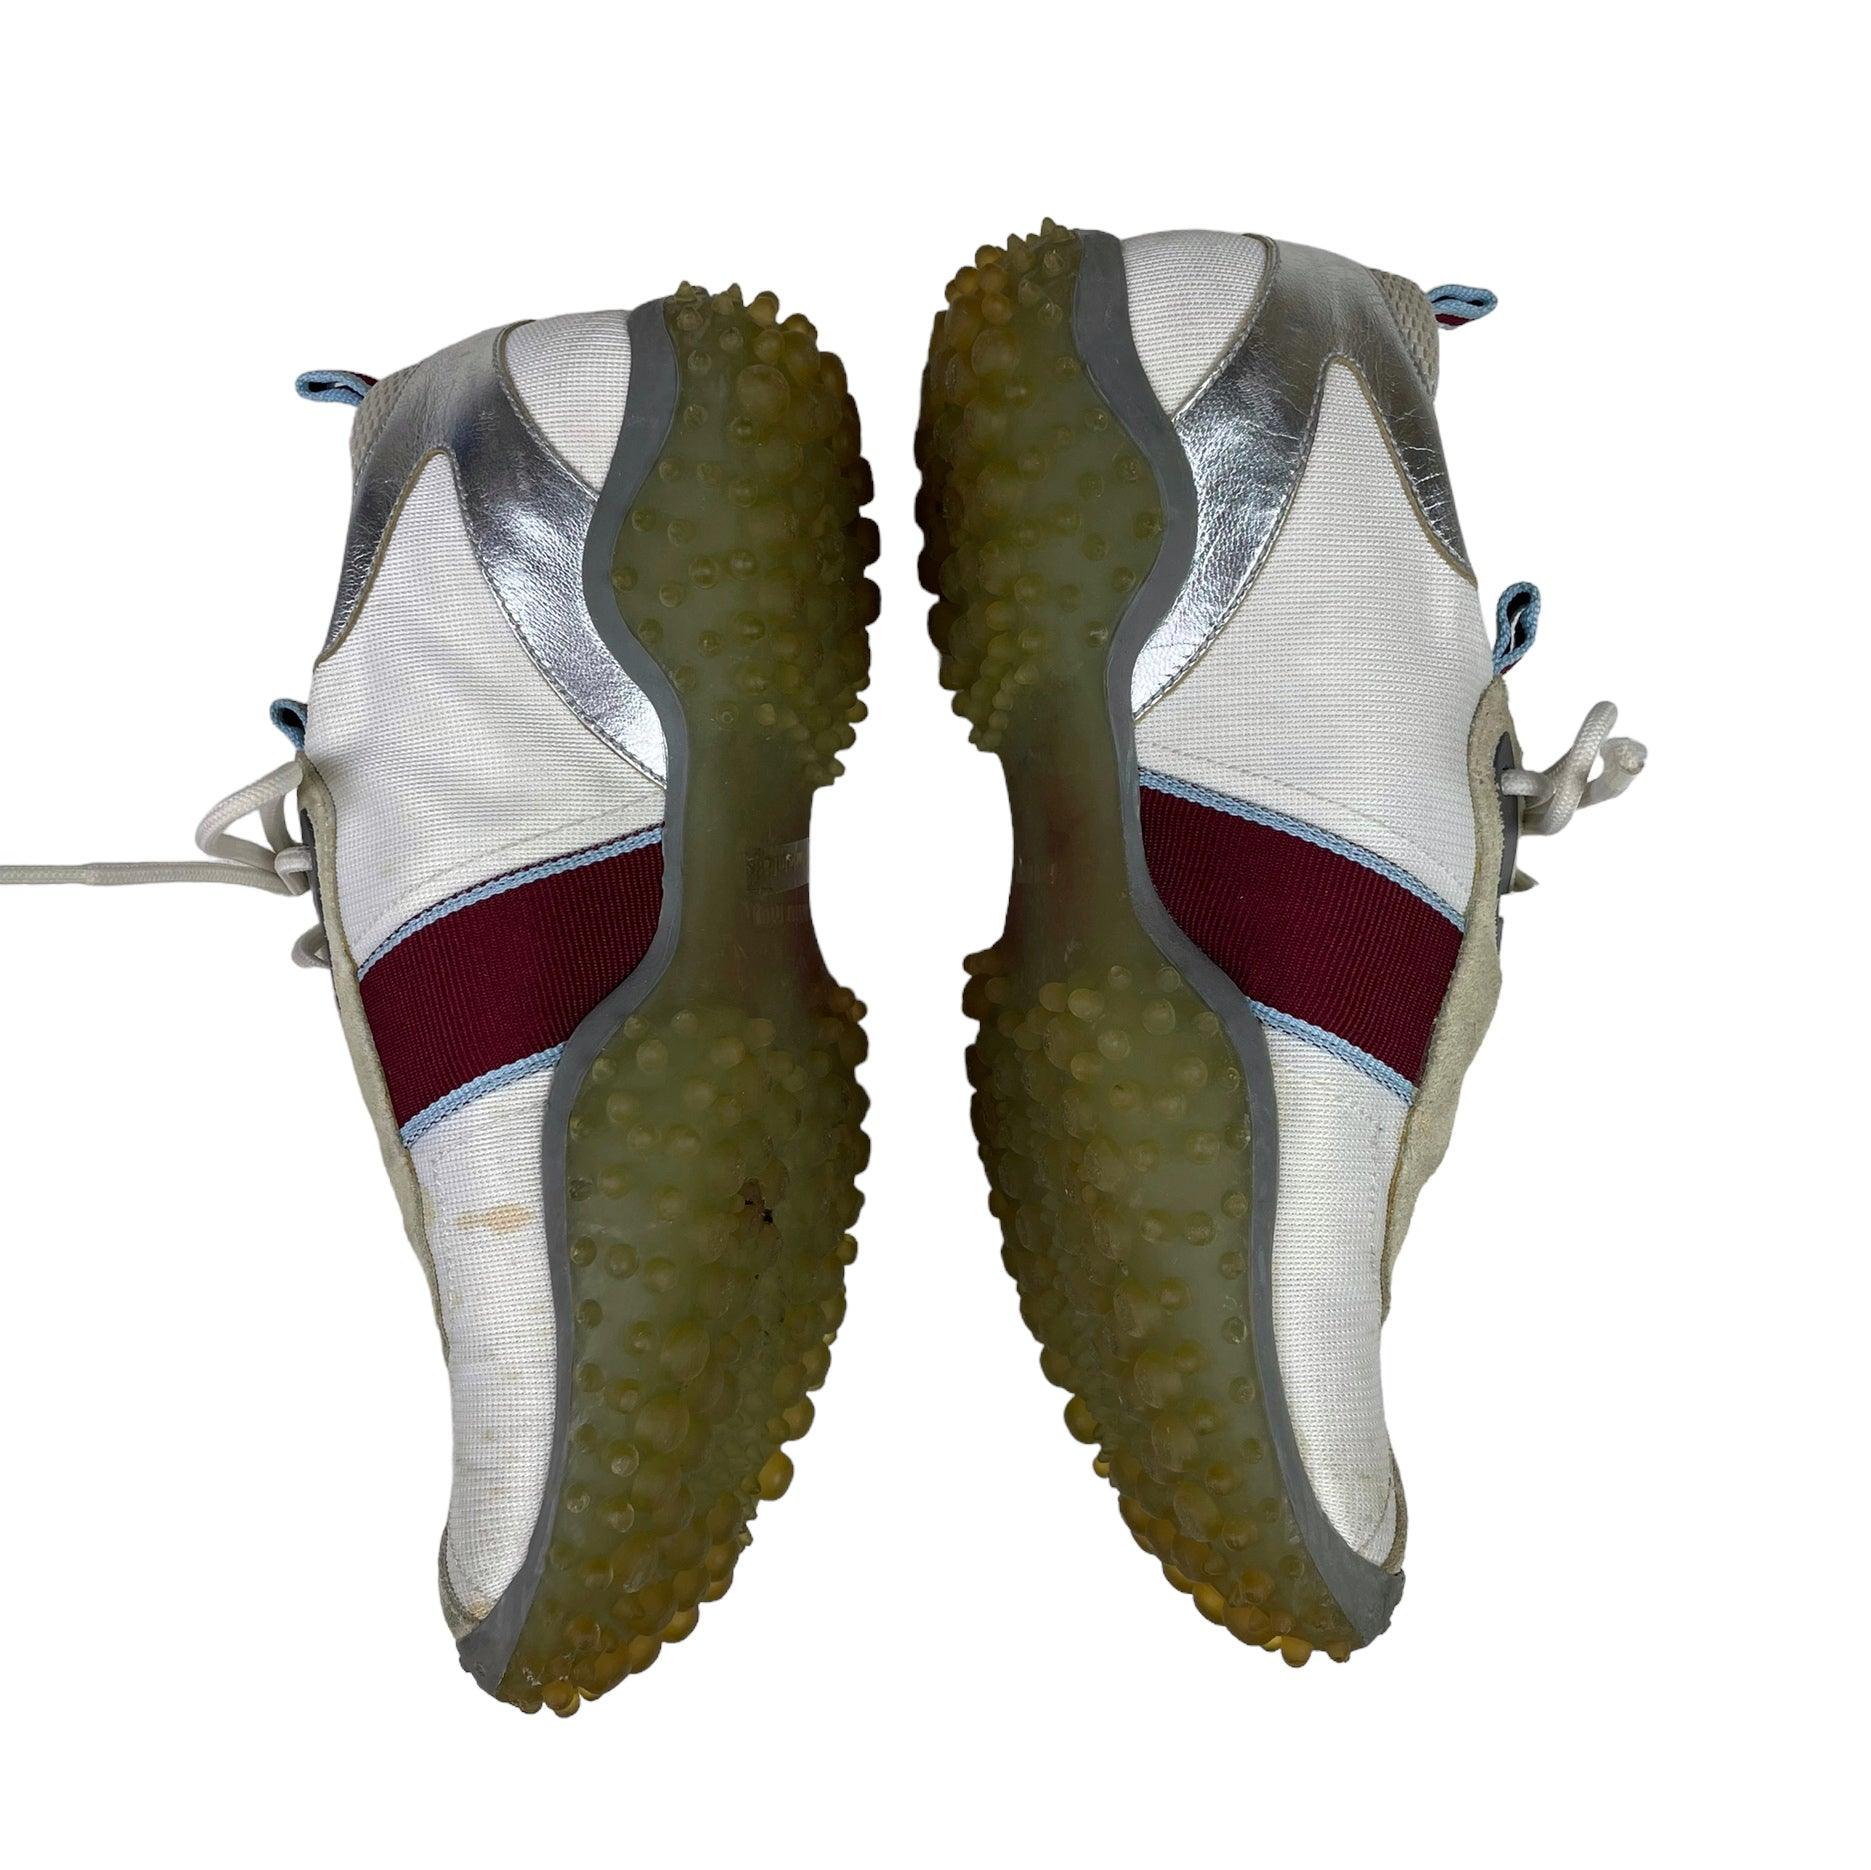 F/W 1999 Miu Miu bubble shoes - Known Source